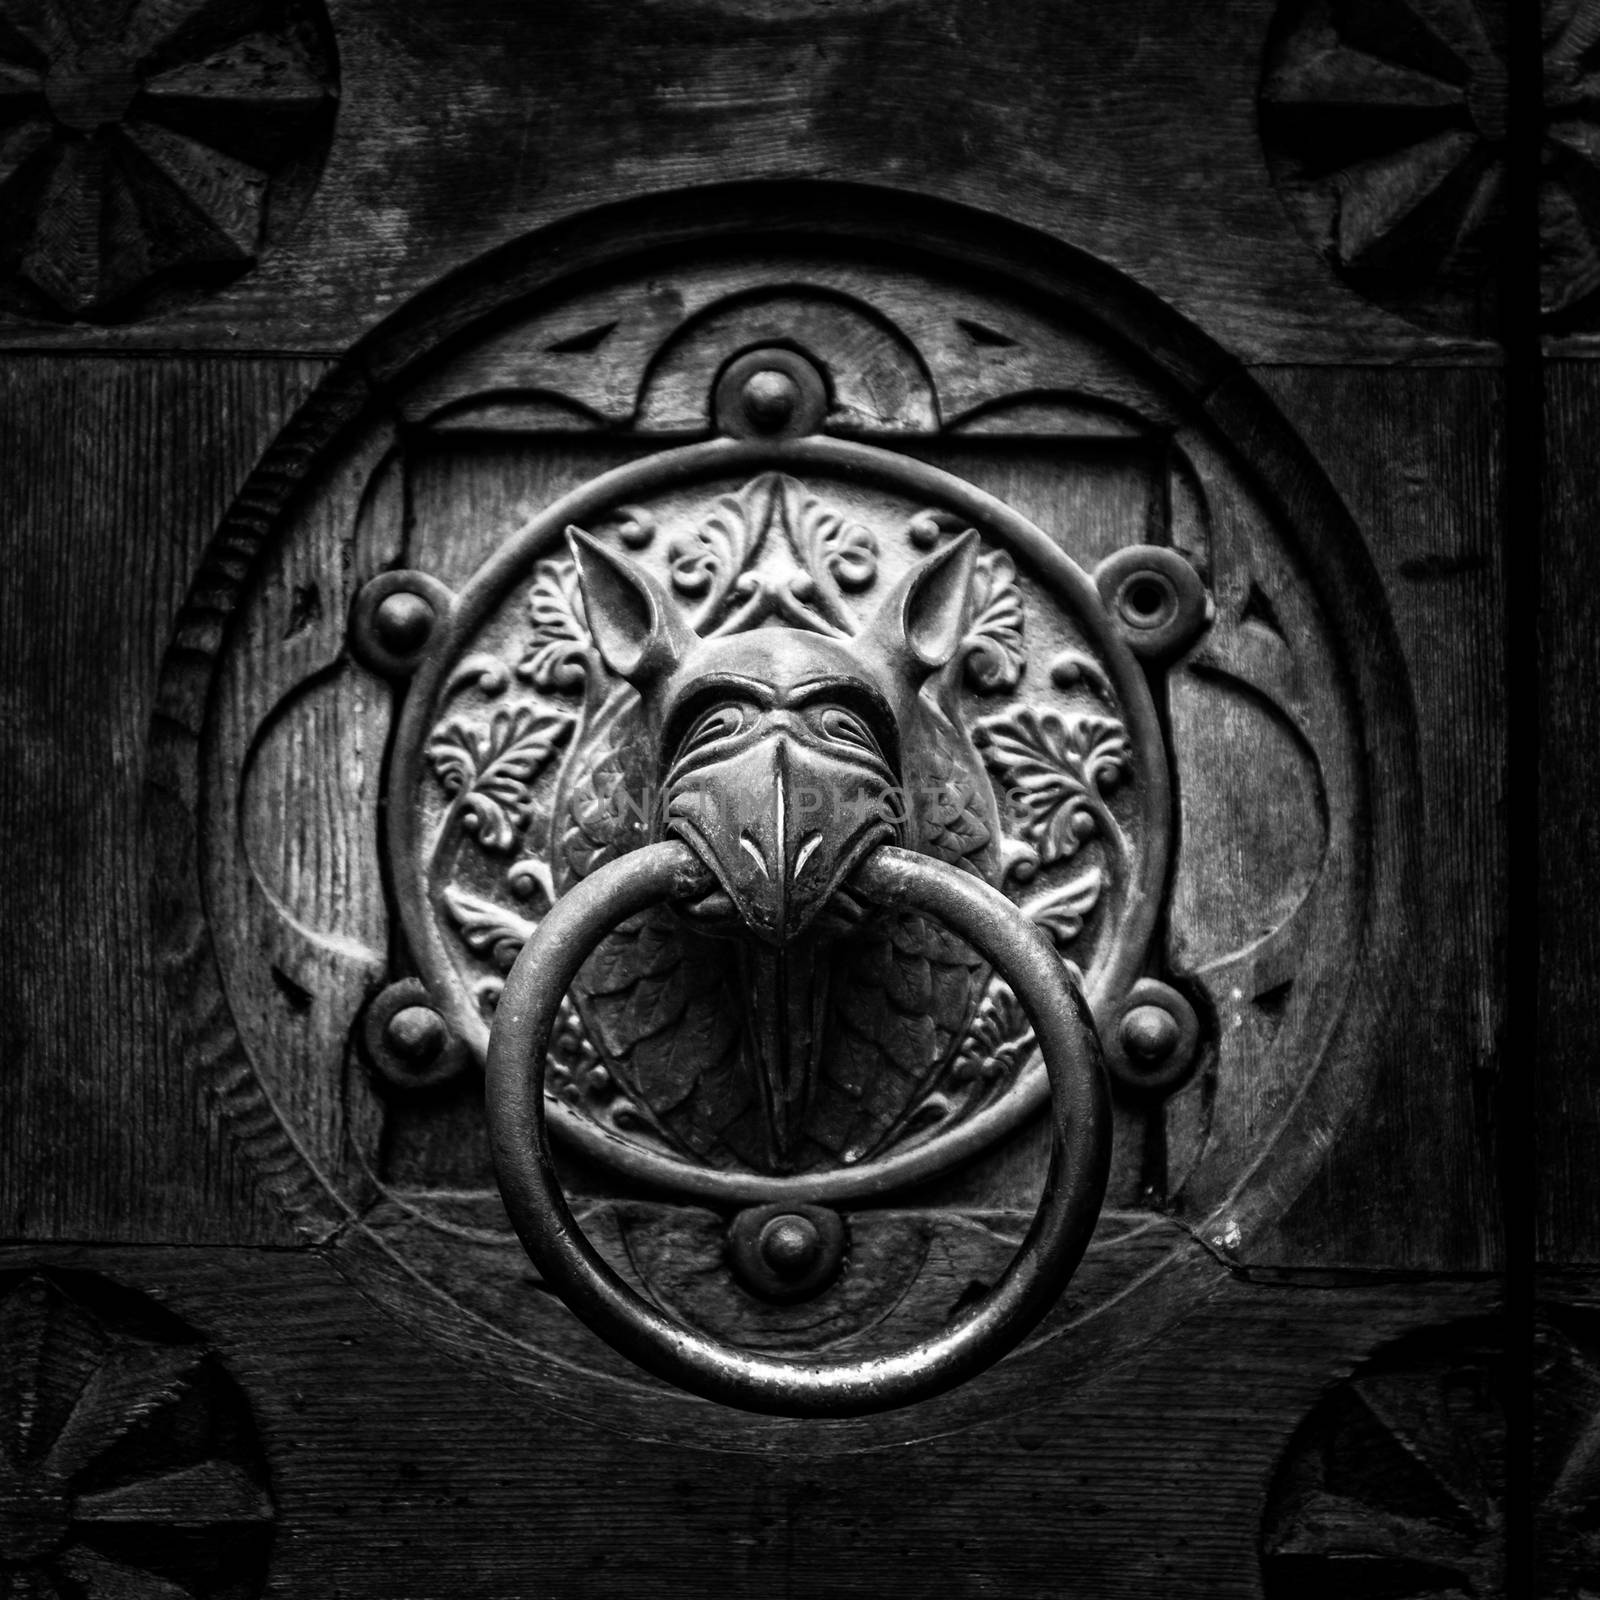 Antique door knocker shaped like monster's head.